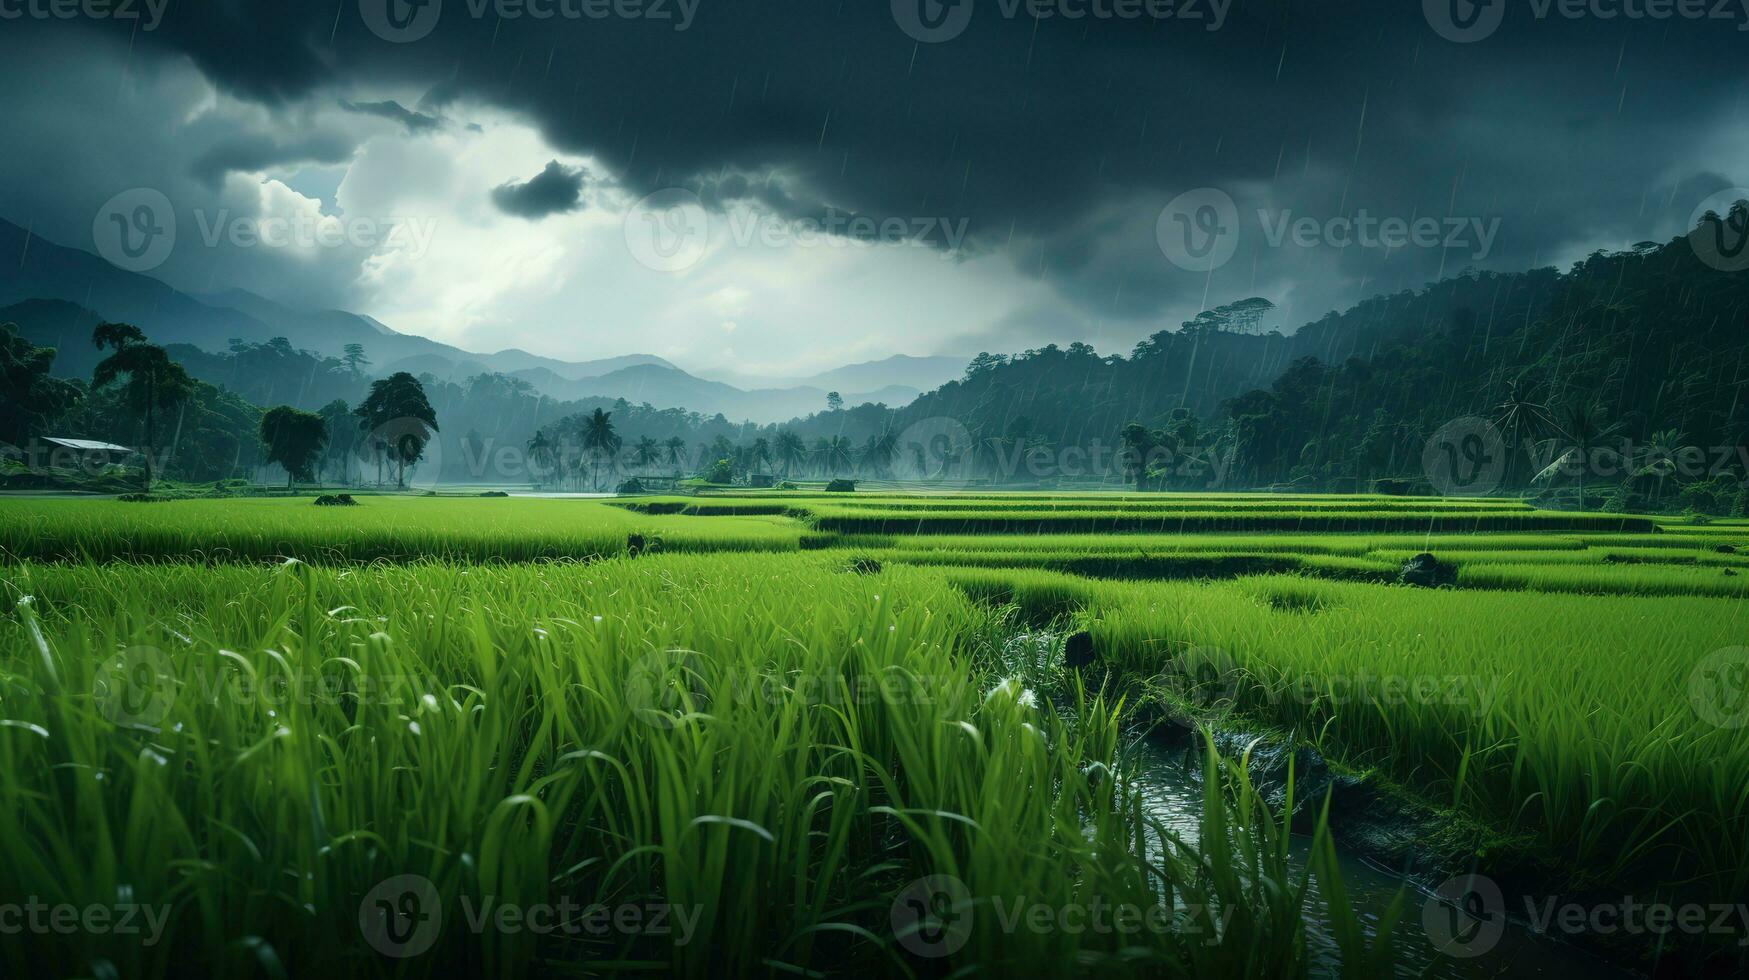 AI generated Green rice fields in the rainy season beautiful natural scenery photo